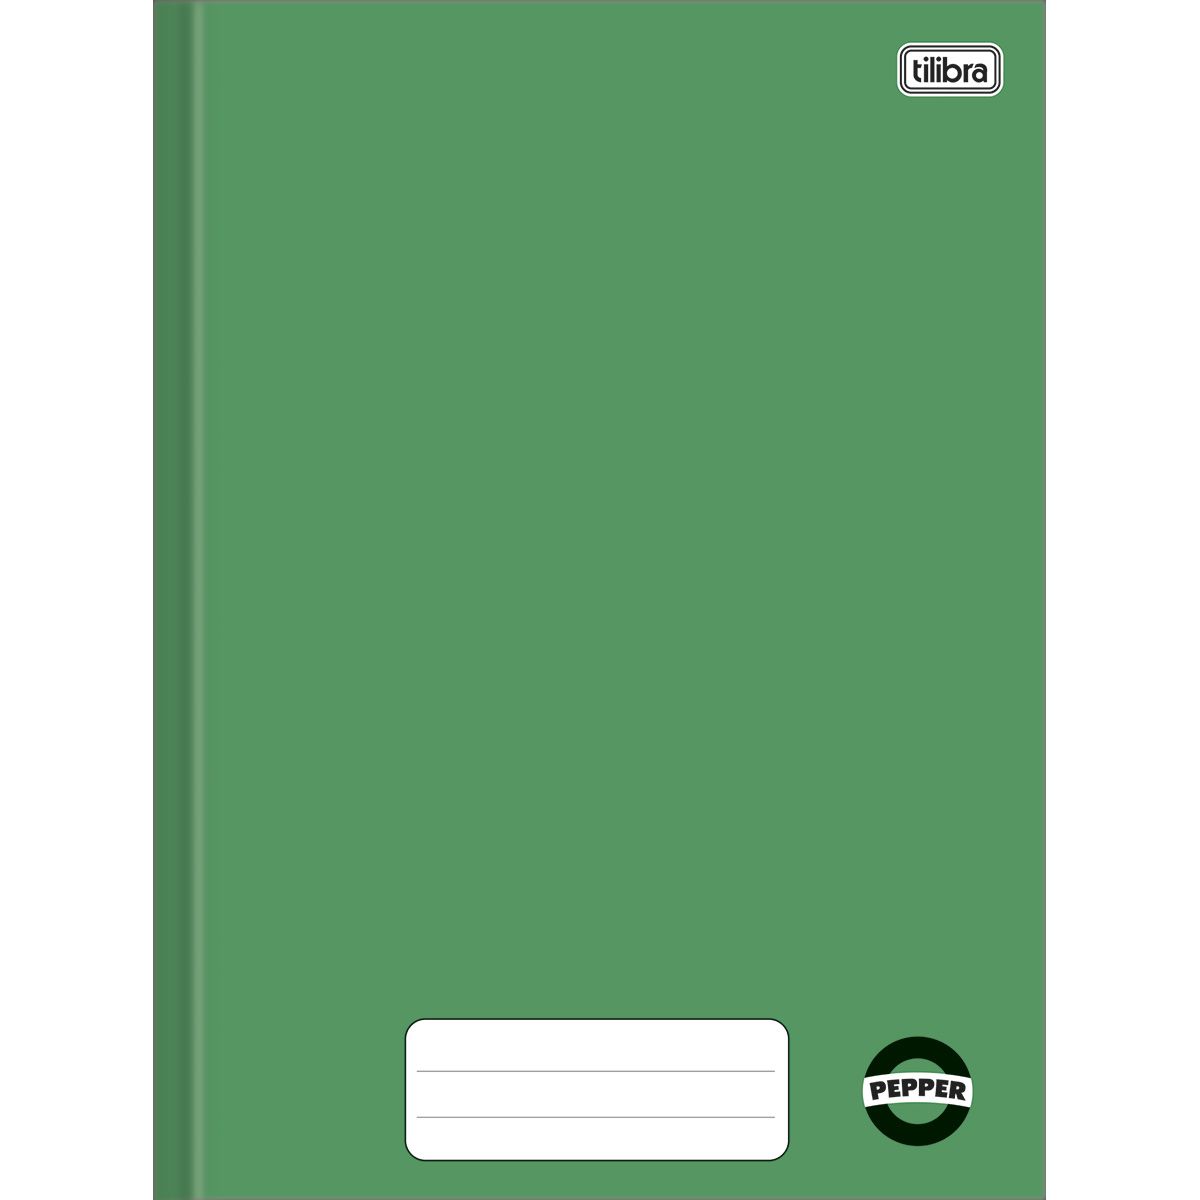 Caderno brochura 1/4 40 fls verde PEPPER Tilibra